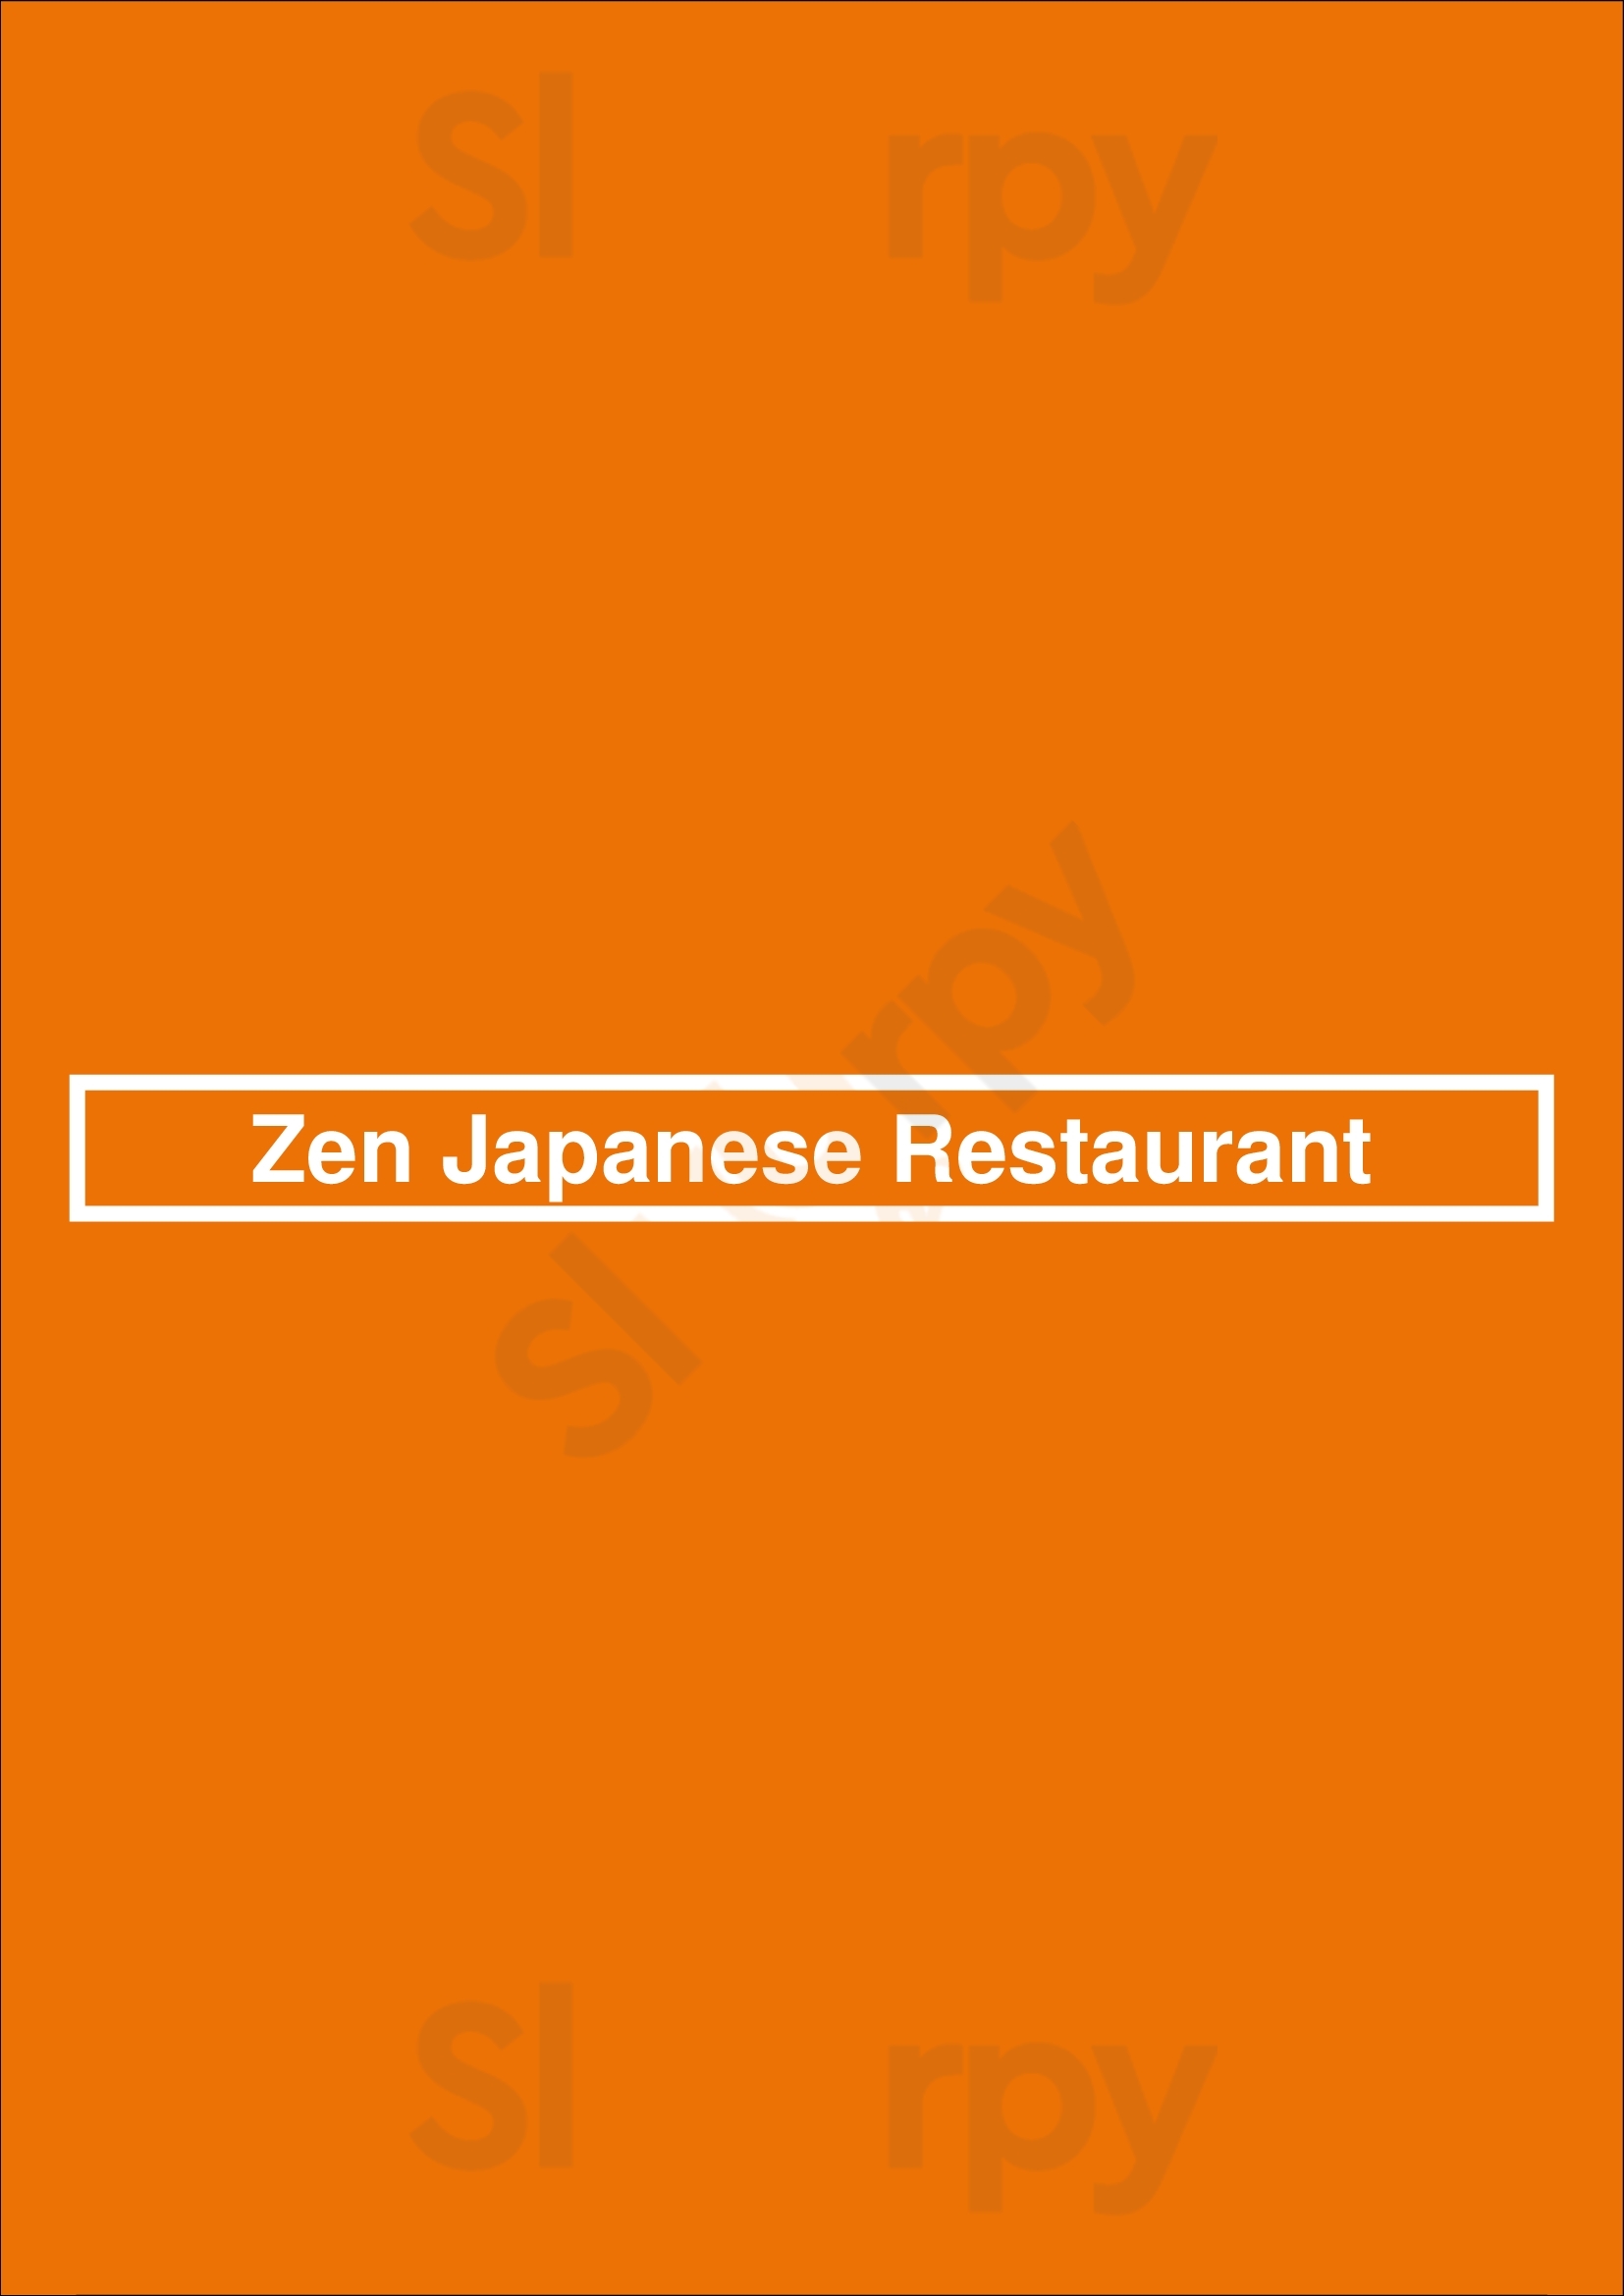 Zen Japanese Restaurant Hawthorn Menu - 1